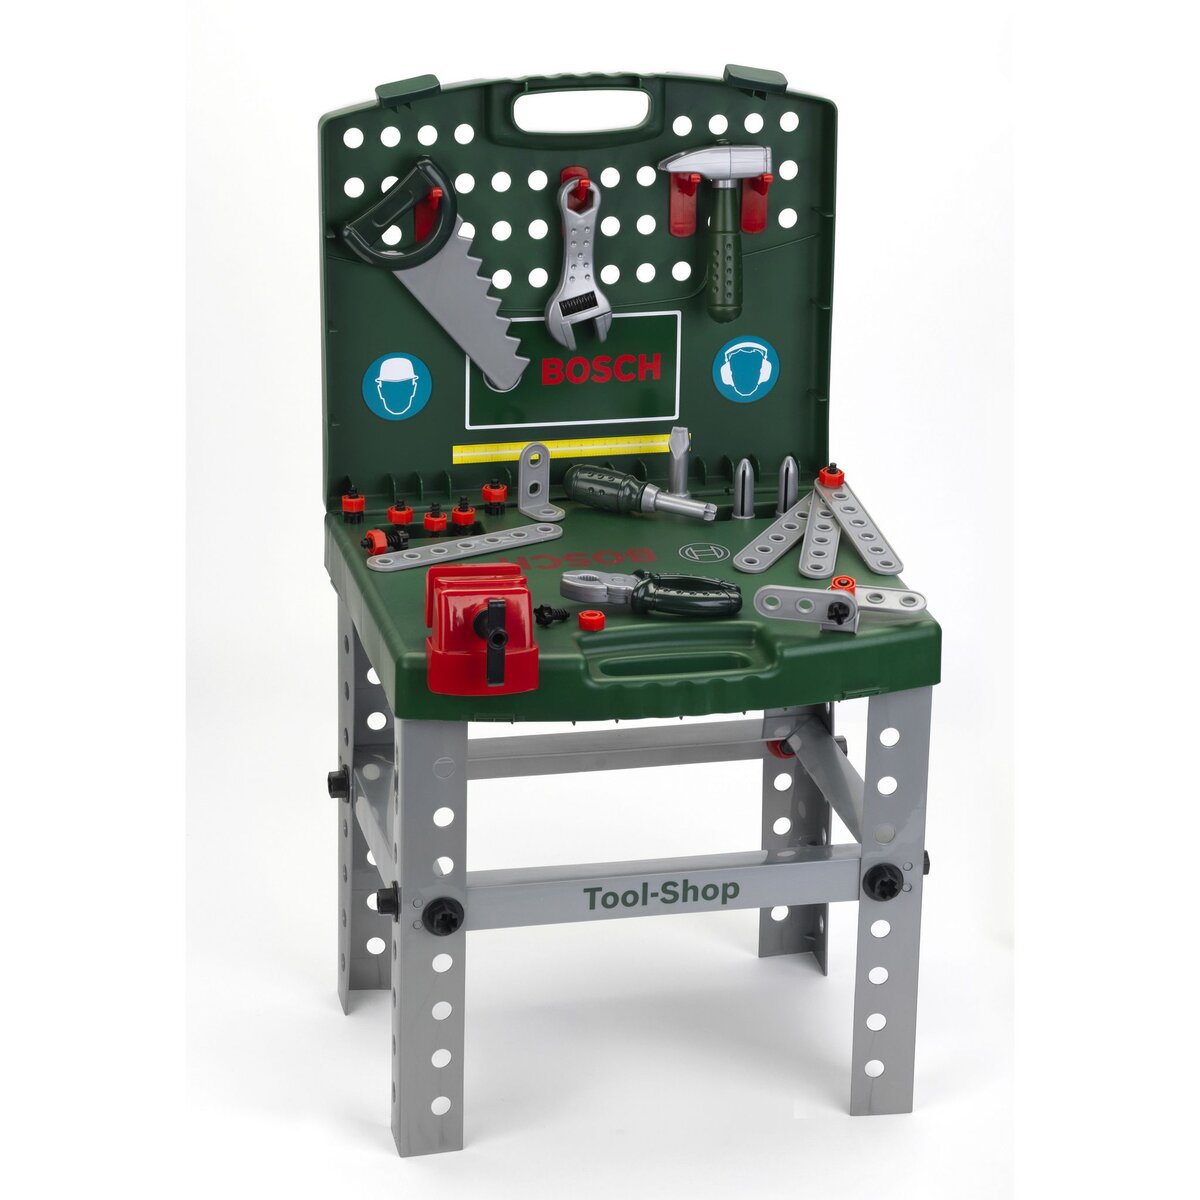 KLEIN Établi pliable Tool-Shop - Bosch - jouet d'imitation